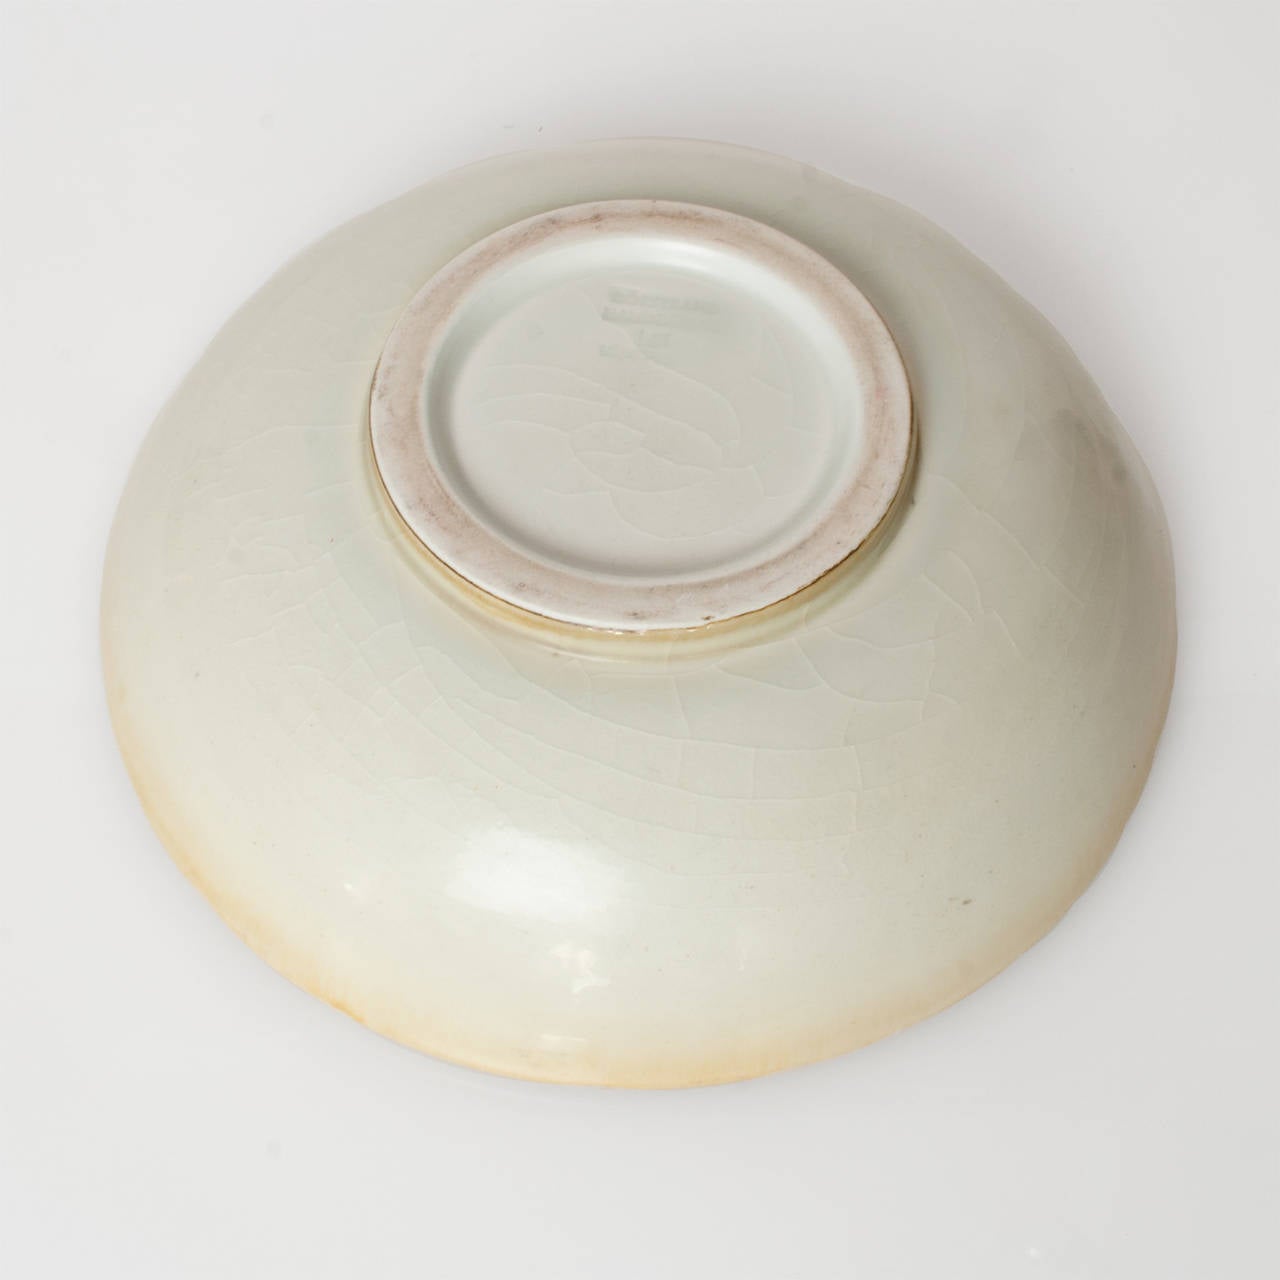 Art Deco Scandinavian Modern Ceramic Bowl in Golden Glaze by Gertrud Lonegren, Rorstrand